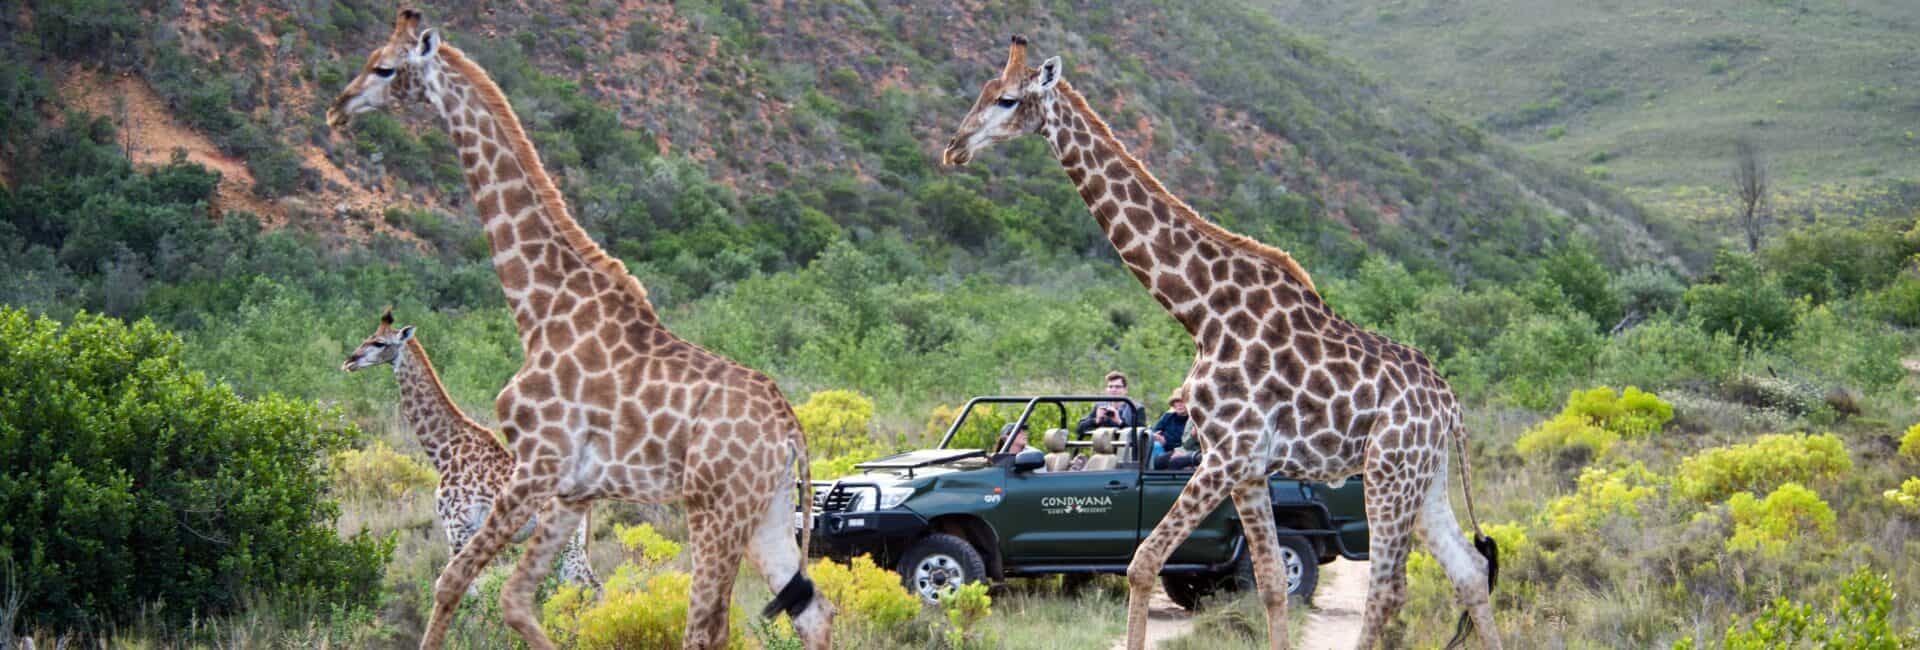 Gondwana Game Reserve - Game Drives